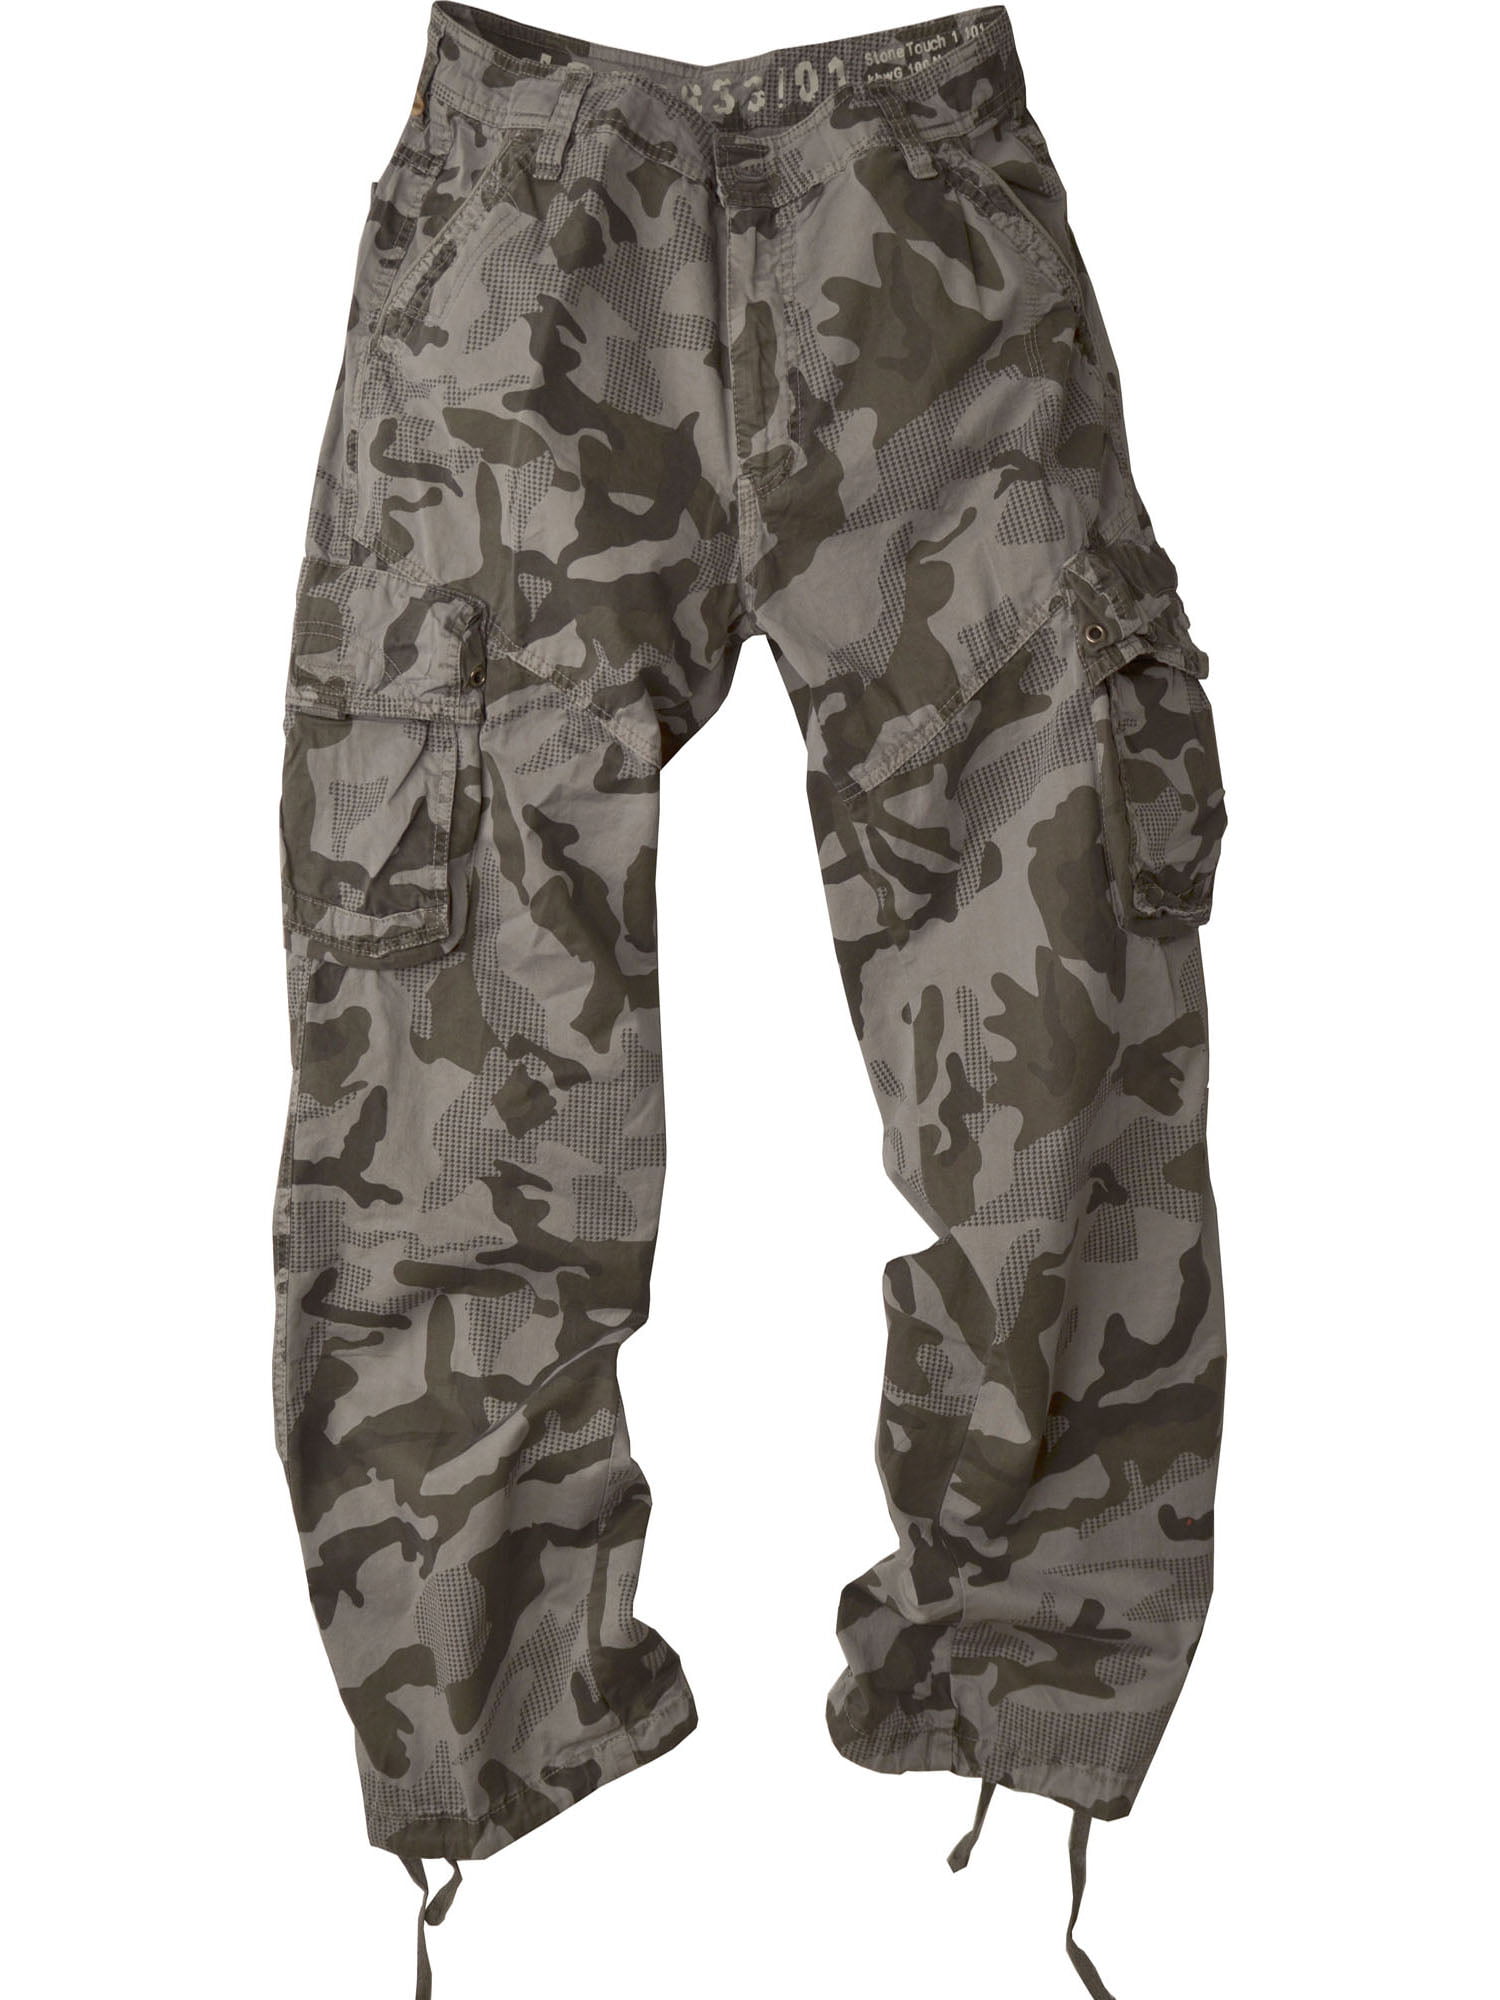 StoneTouch Men's Military-Style Cargo Camo Grey Color Pants 28C1-42x32 ...